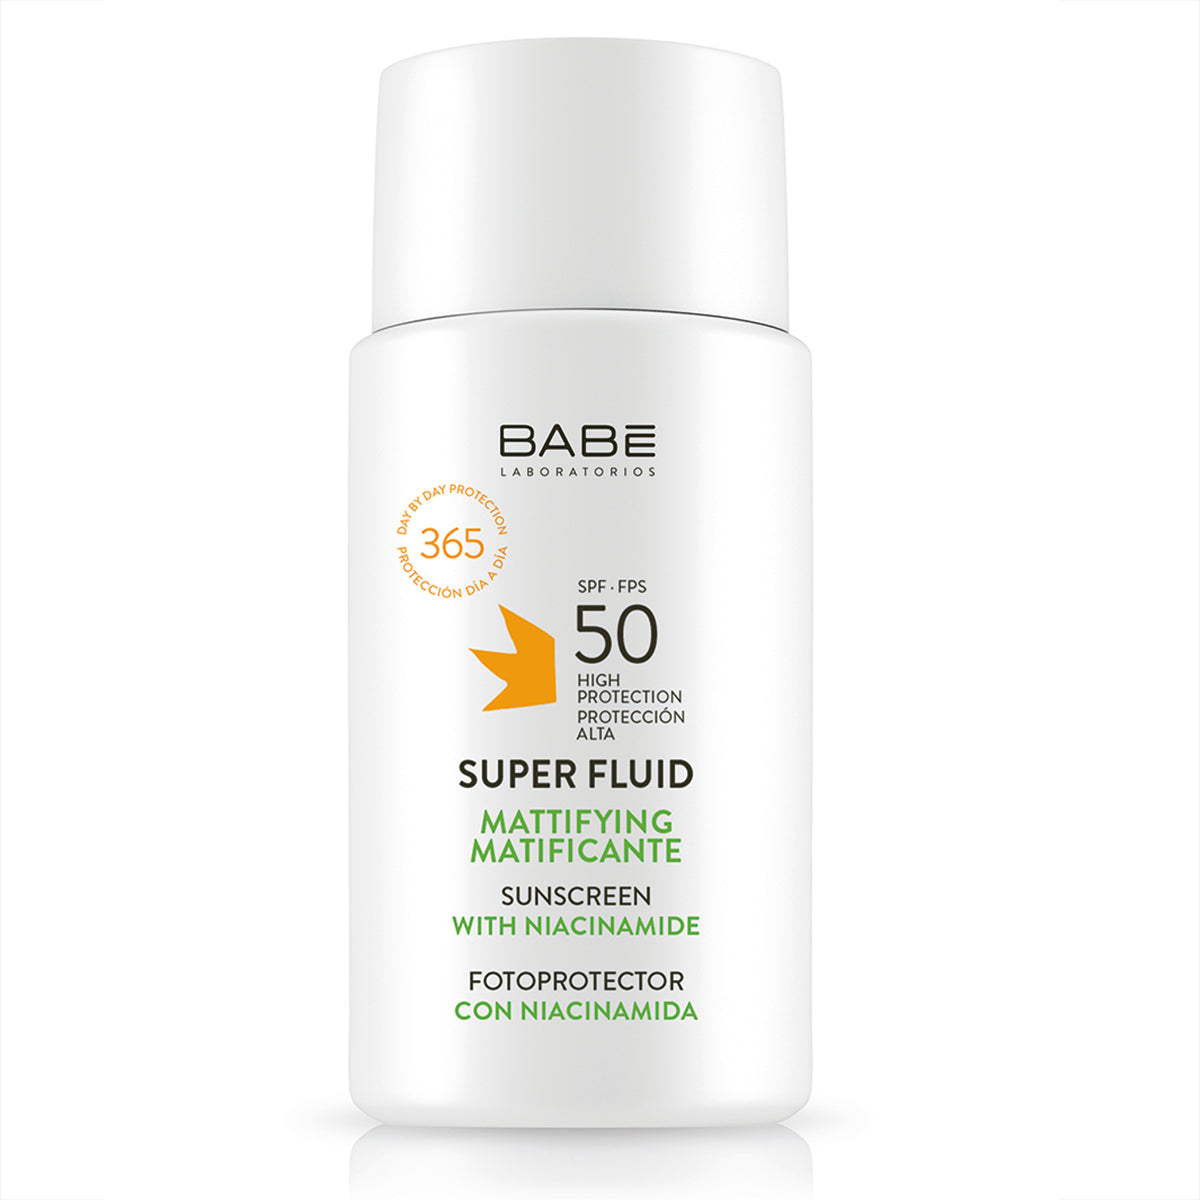 Babe Fotoproteccion facial super fluido matificante spf50 50ml.